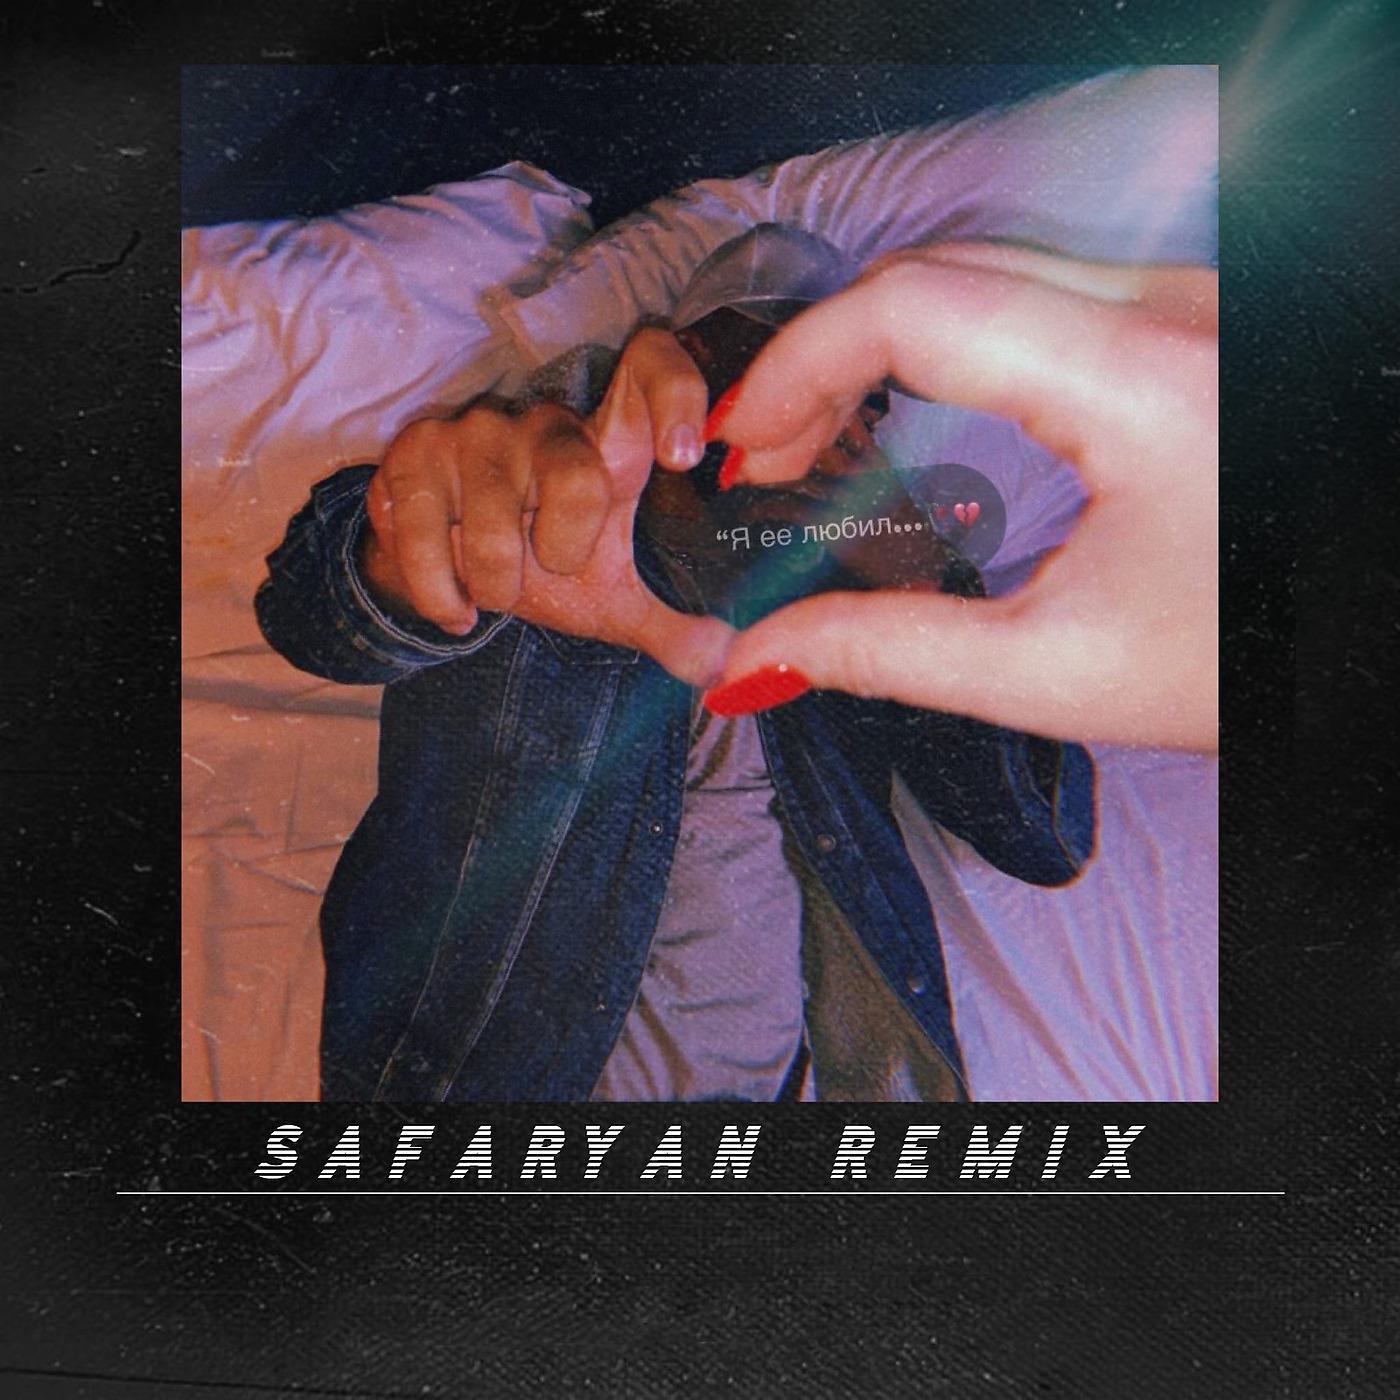 Мама я ее любил ремикс. Safaryan Beats. (Safaryan Remix). Я её любил Vitali. Джанага альбом.